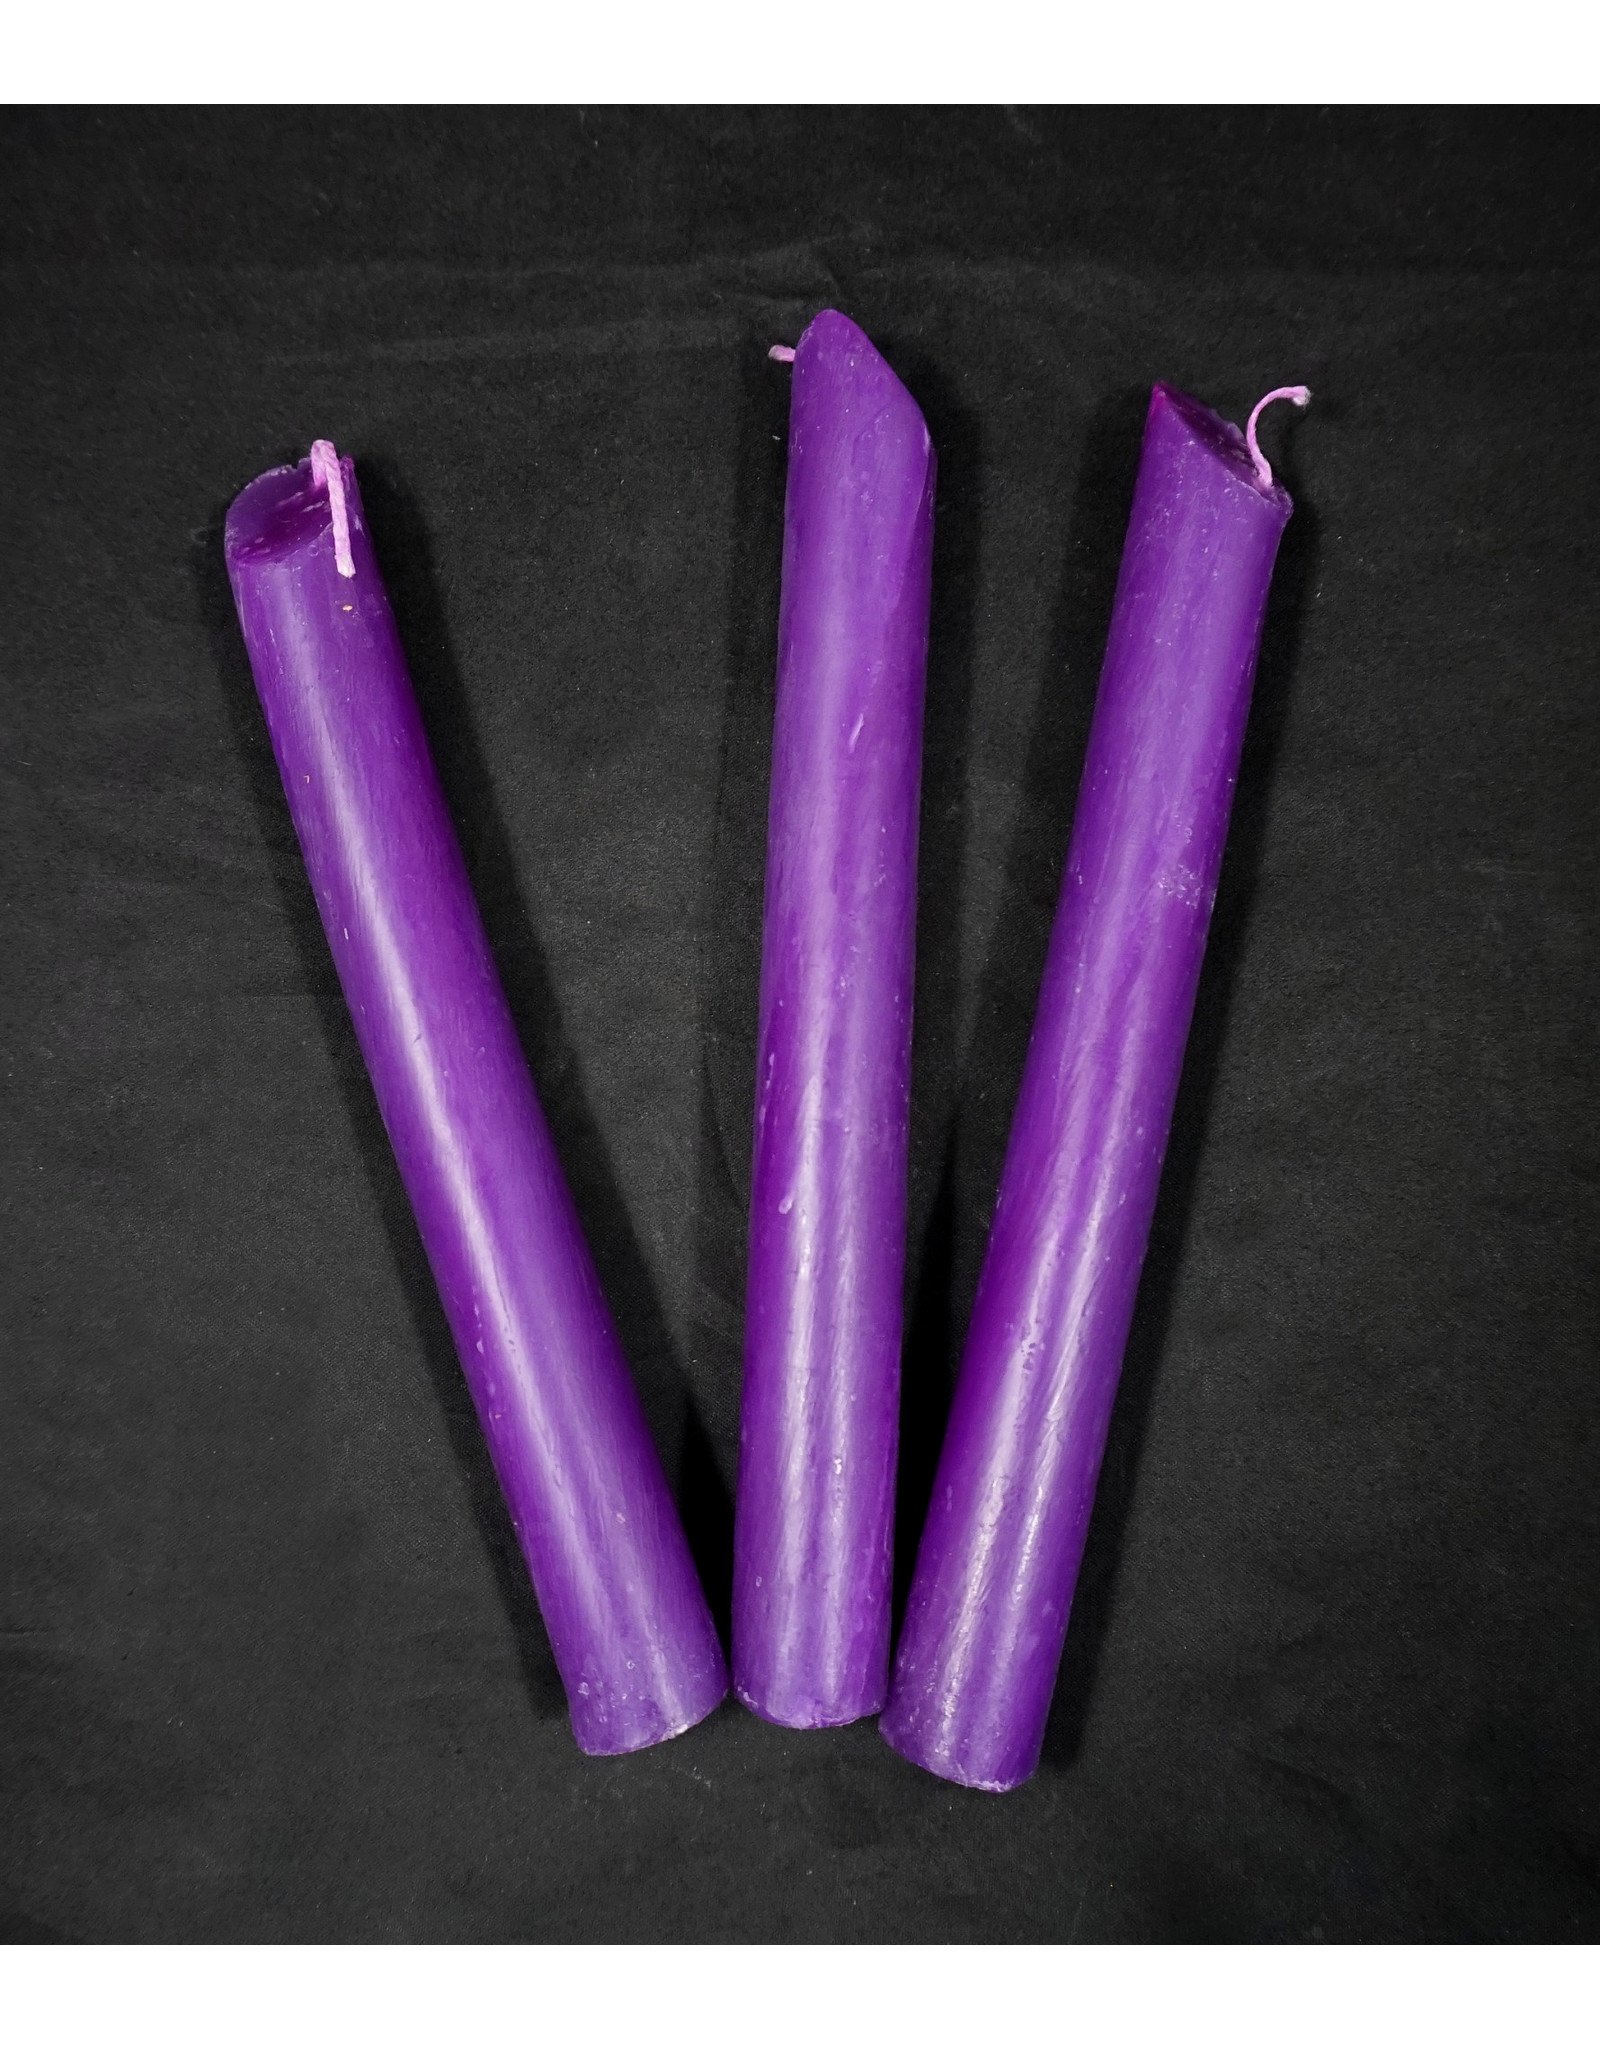 Purple Drip Candle